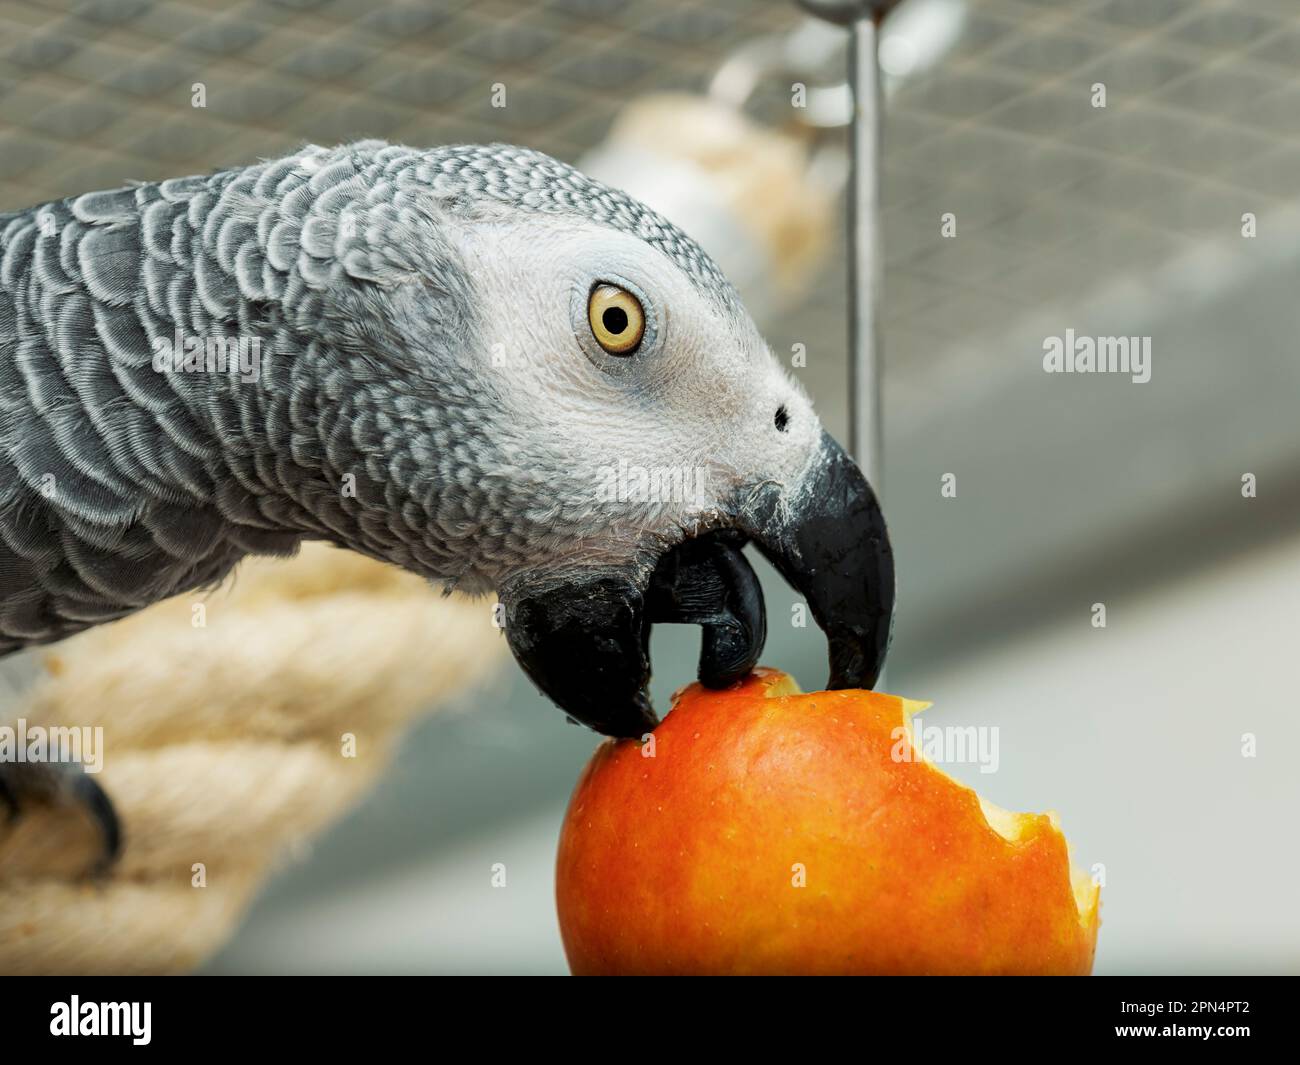 Head portrait of gray parrot eating apple Stock Photo